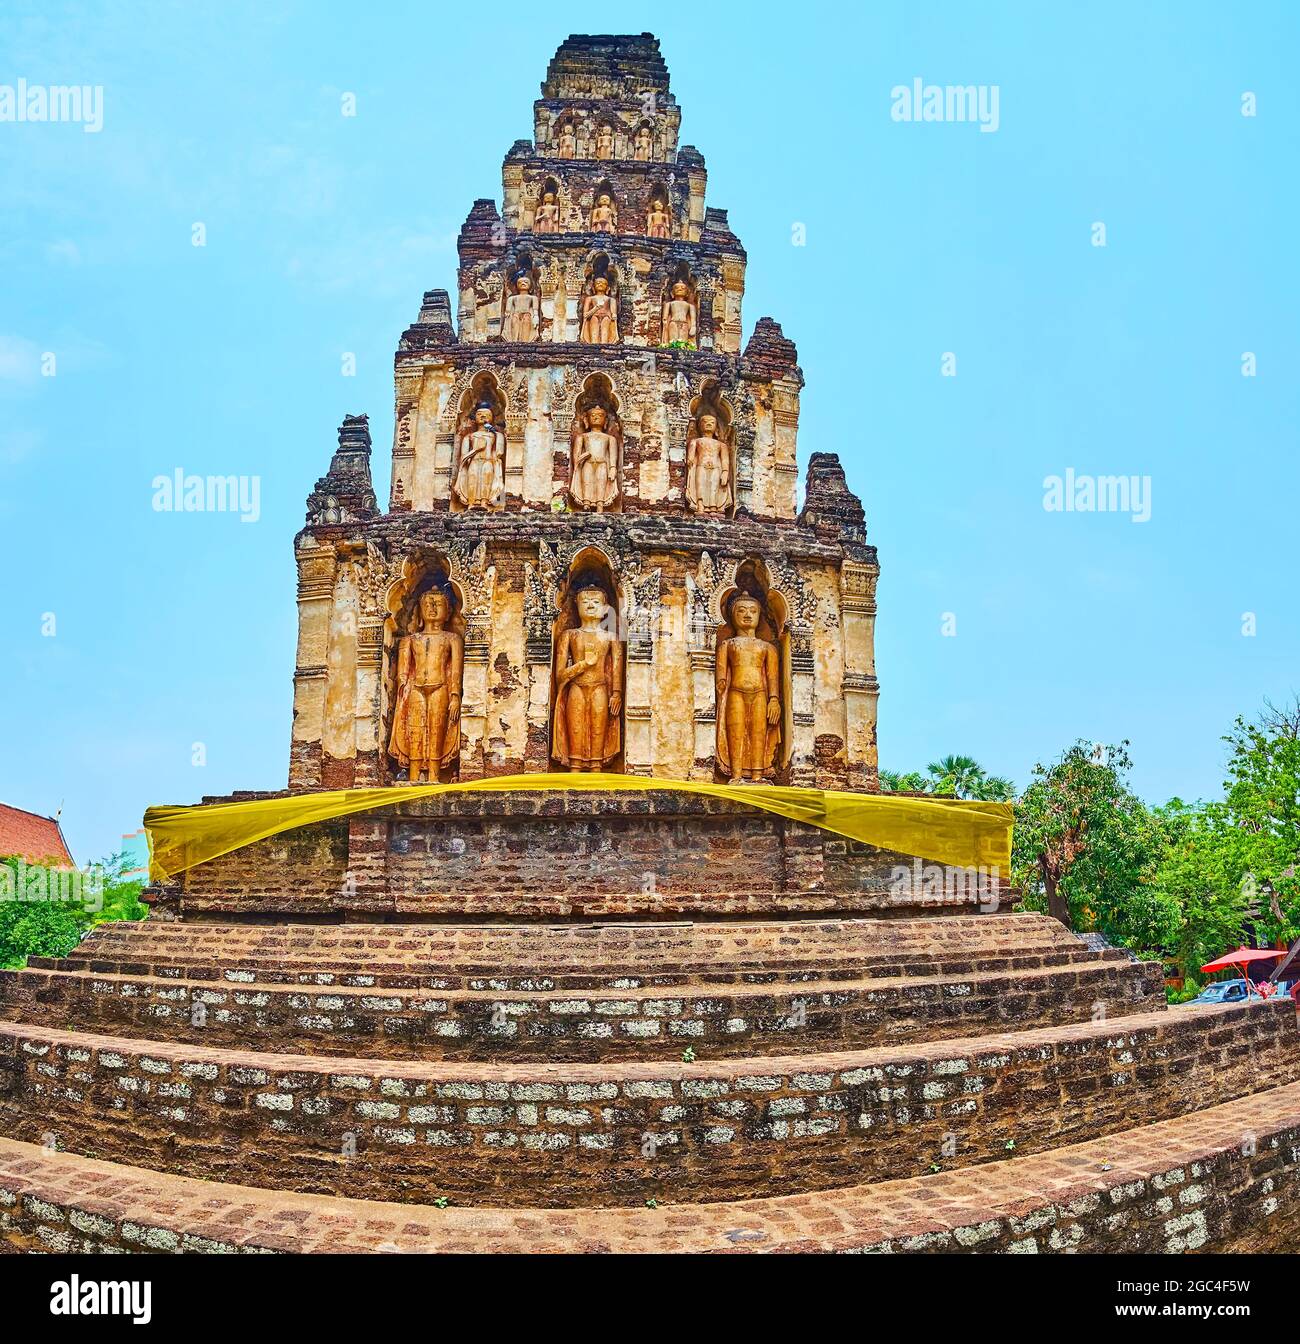 The ruins of brick Suwan Chedi Jungkote (Kukut Chedi, Suwan Chang Kot) with sculptures of Lord Buddha in niches, Wat Chammathewi, Lamphun, Thailand Stock Photo